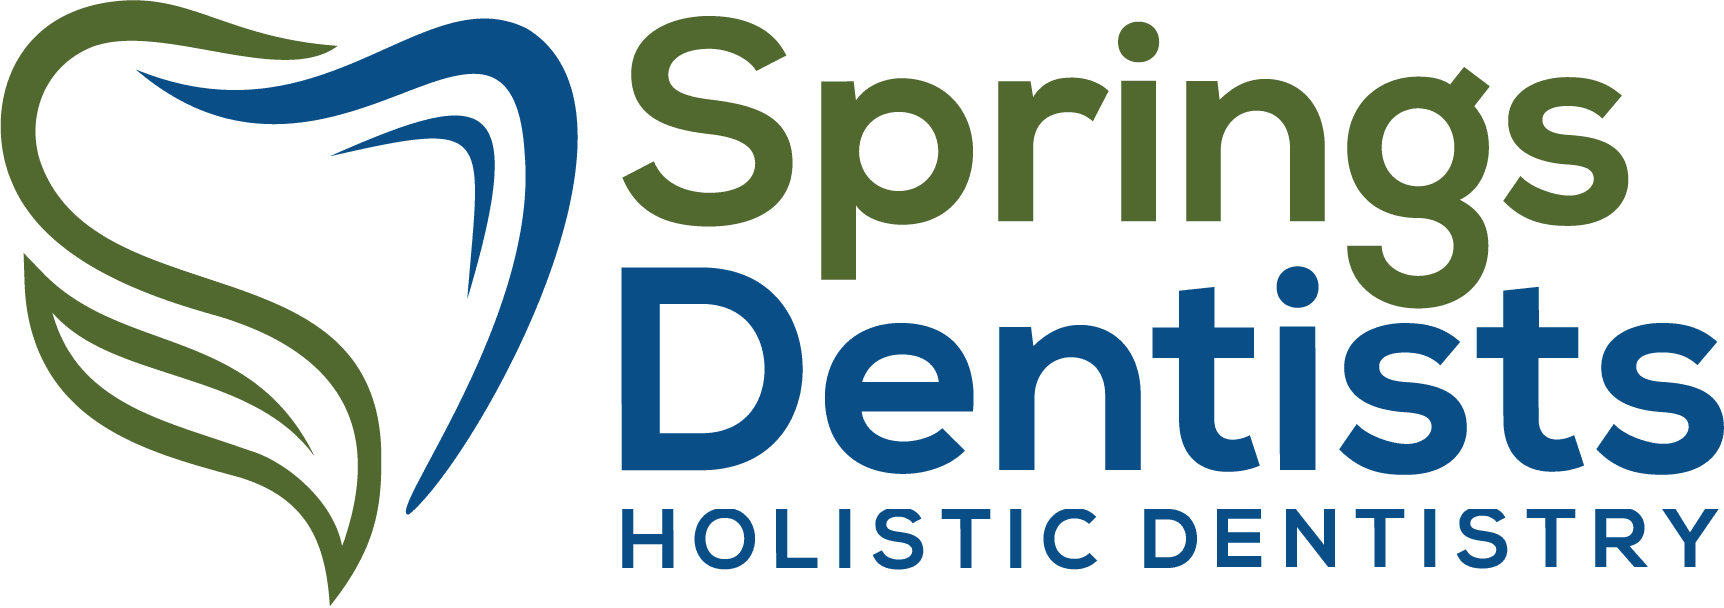 Springs Dentist Logo - Color